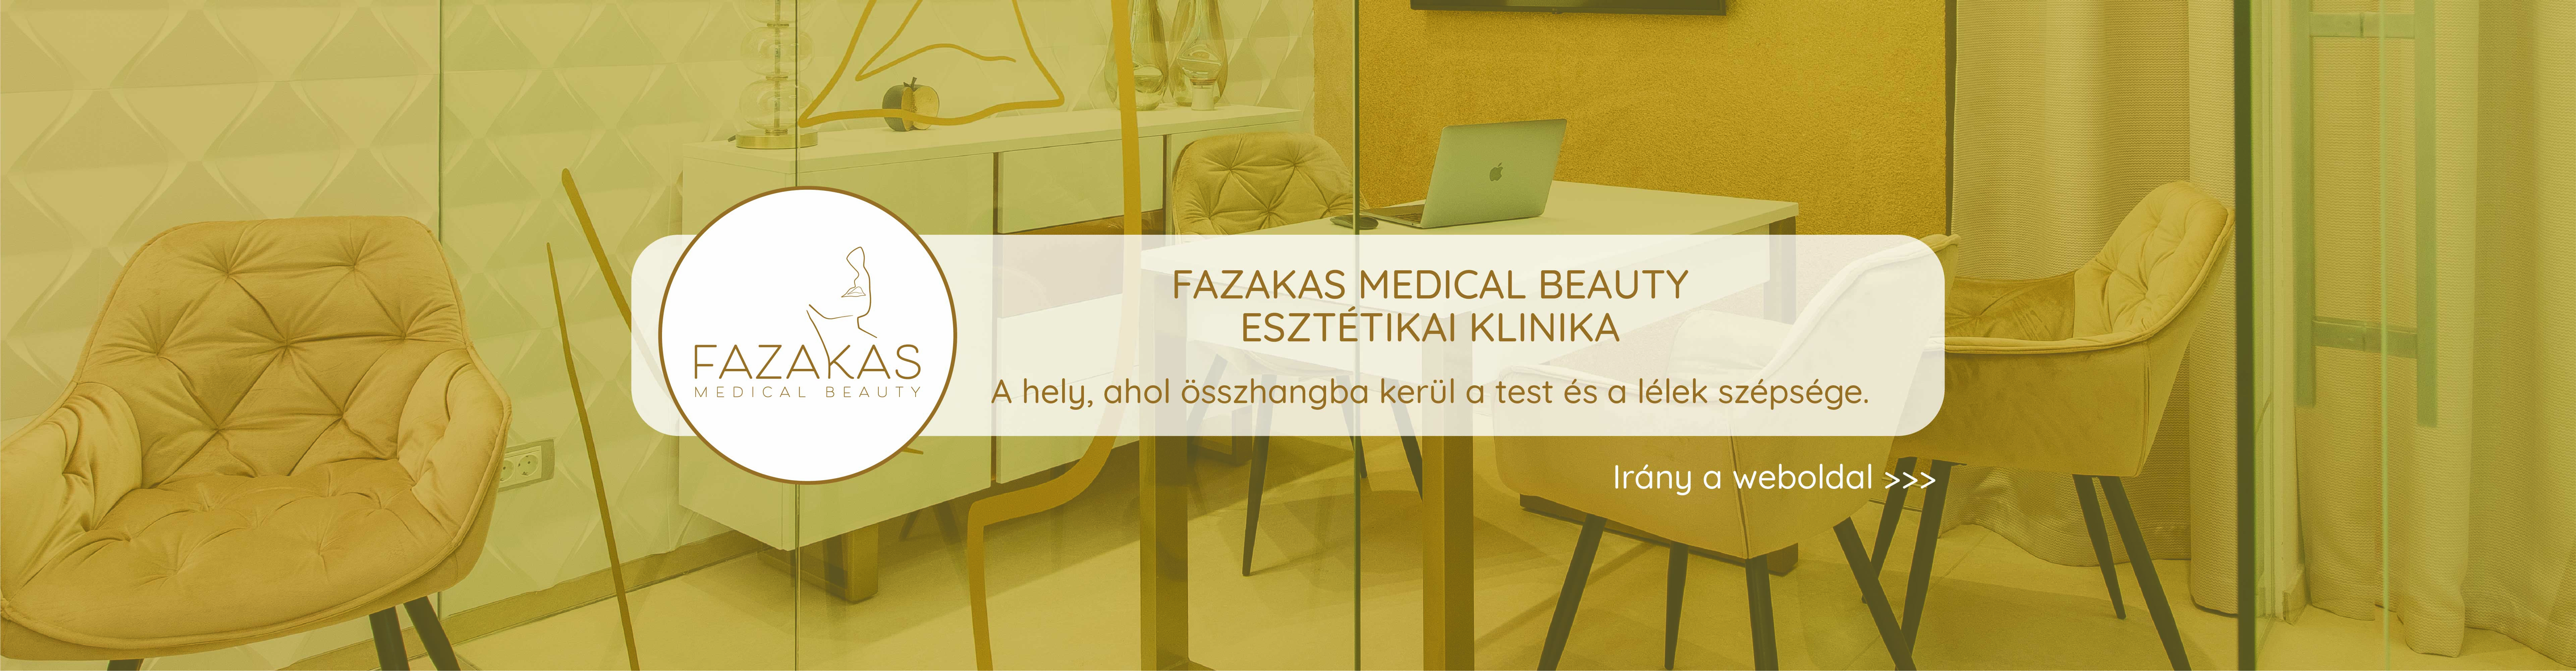 Fazakas medical beauty